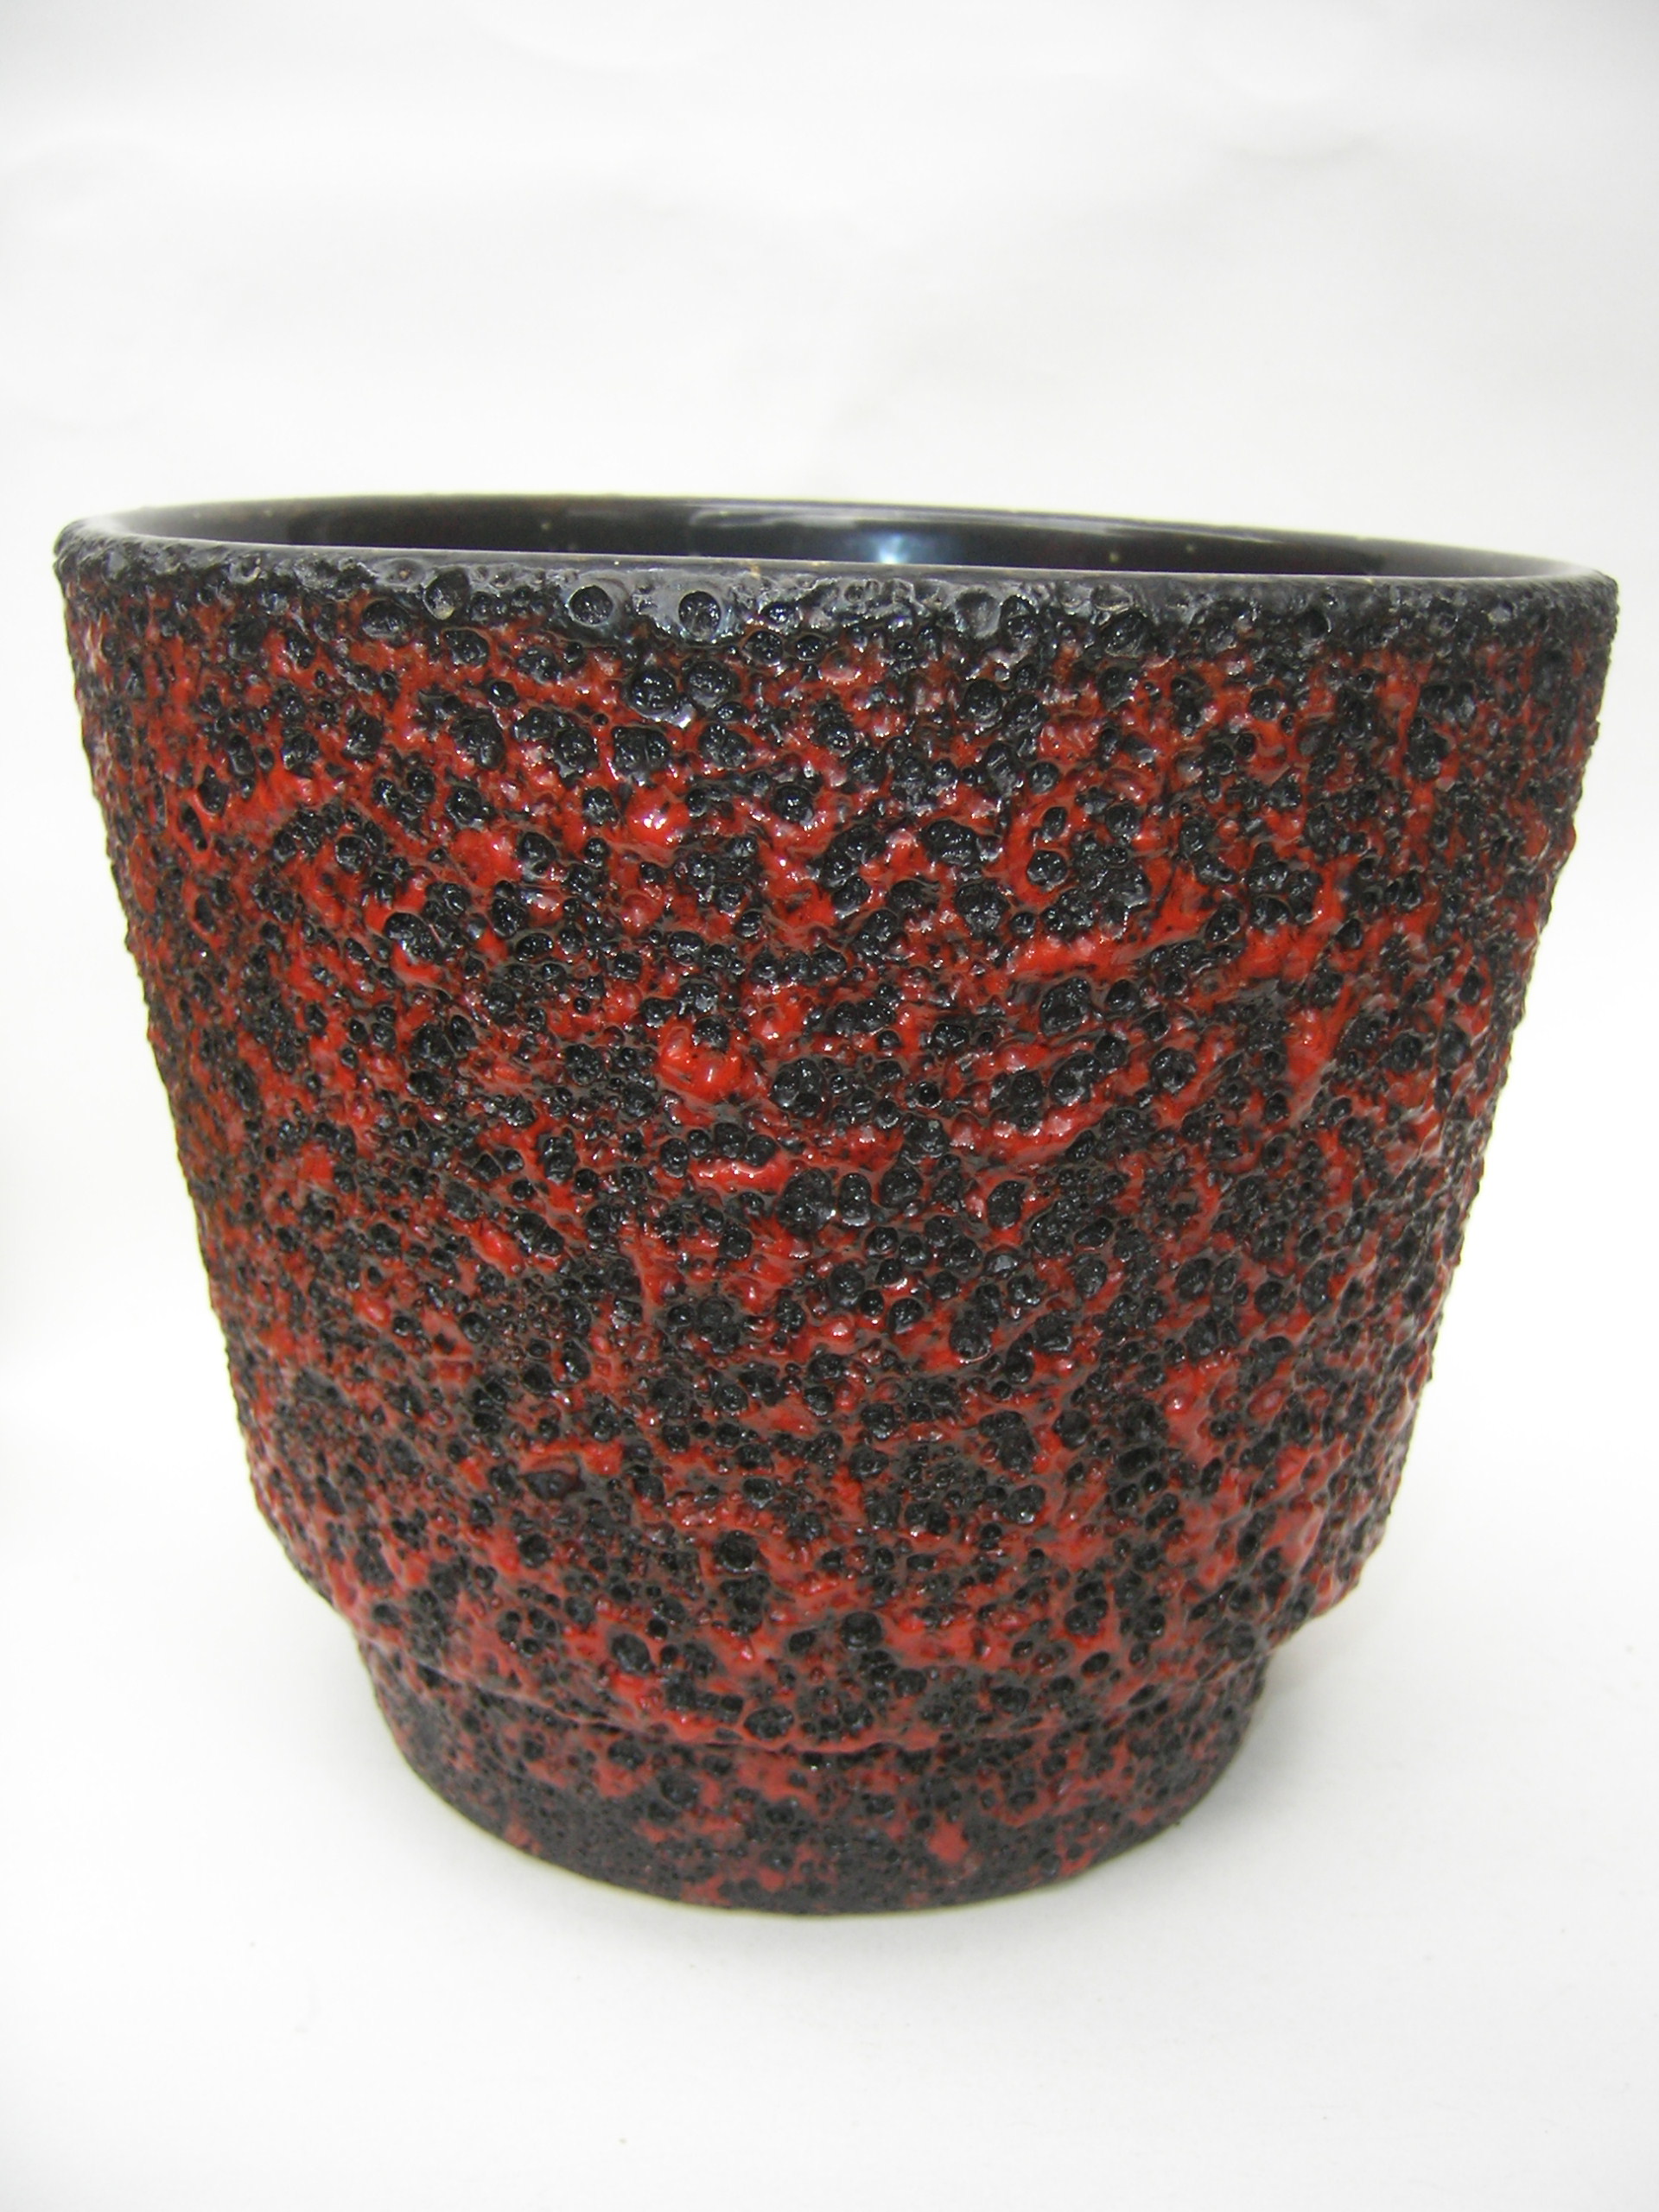 Jopeko Plant Pot West German Pottery Vintage Lava Red Black